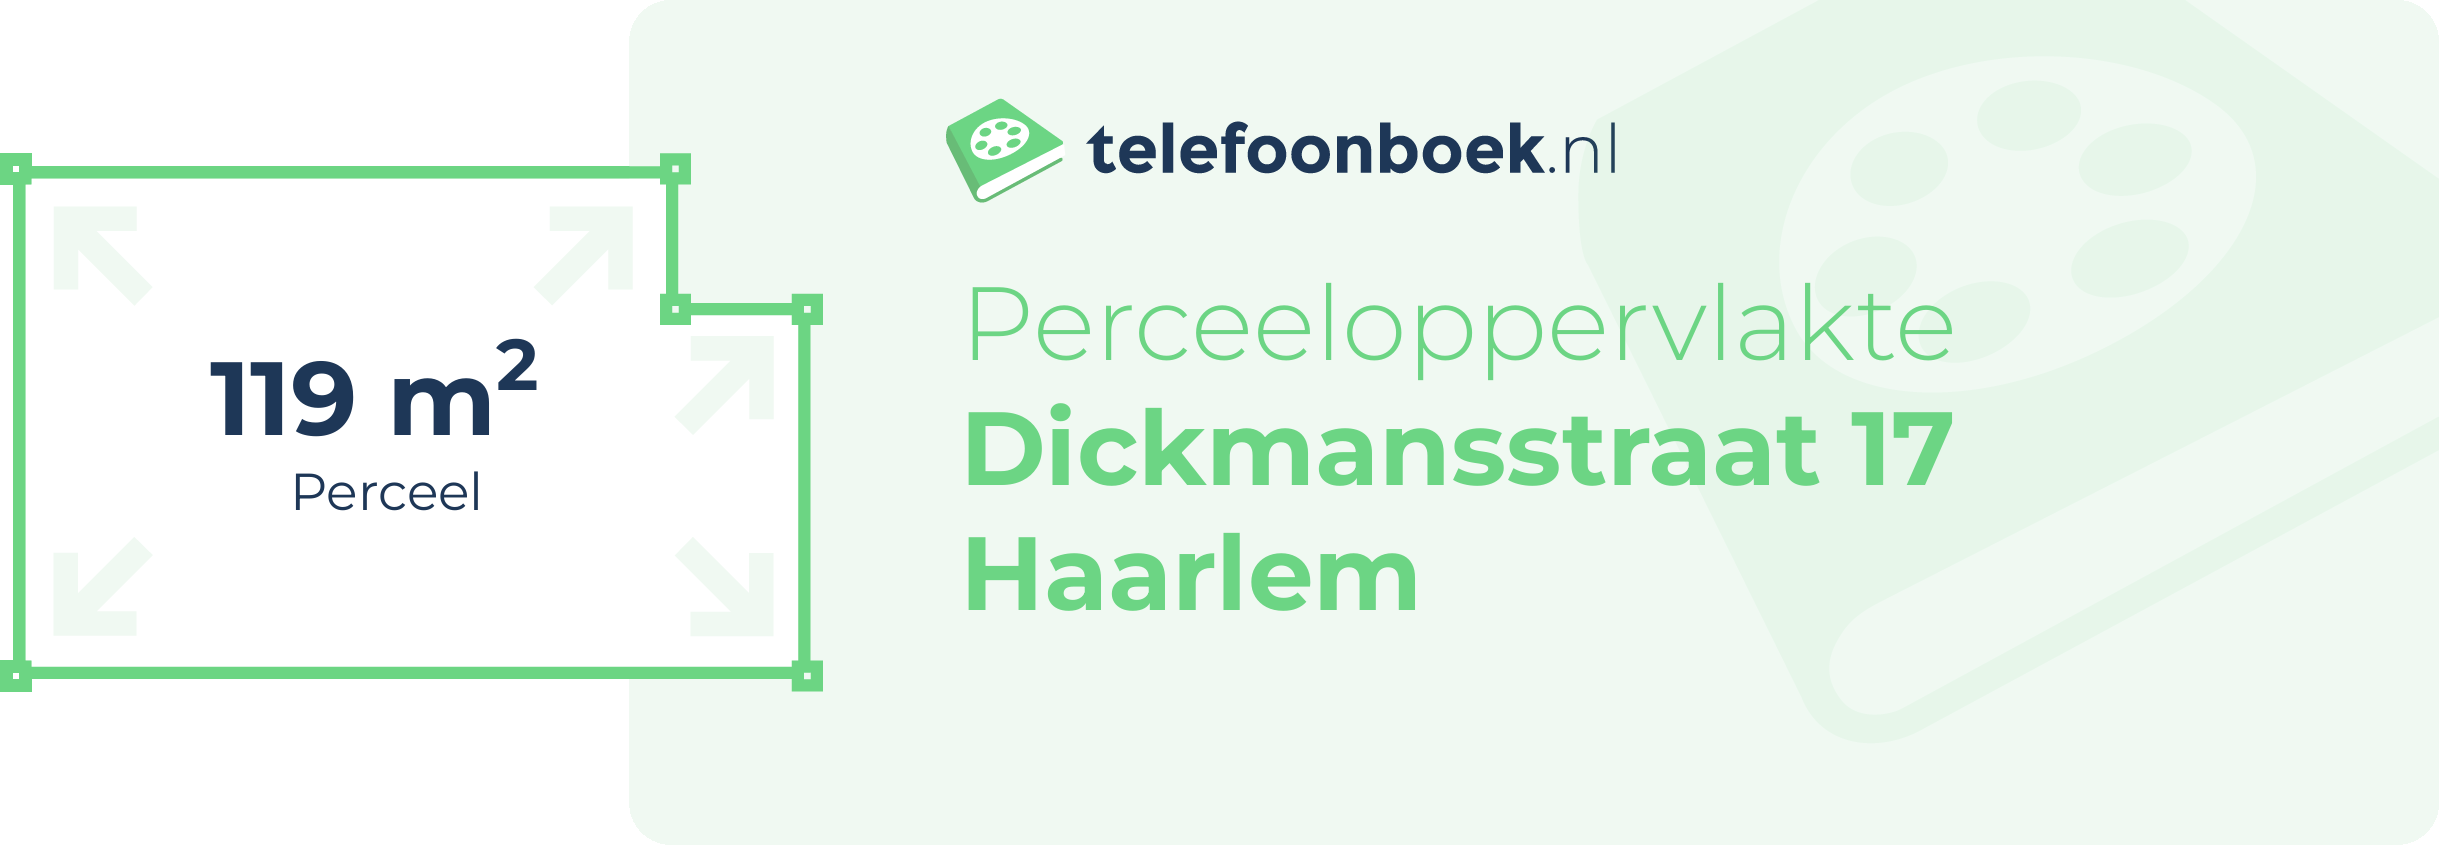 Perceeloppervlakte Dickmansstraat 17 Haarlem